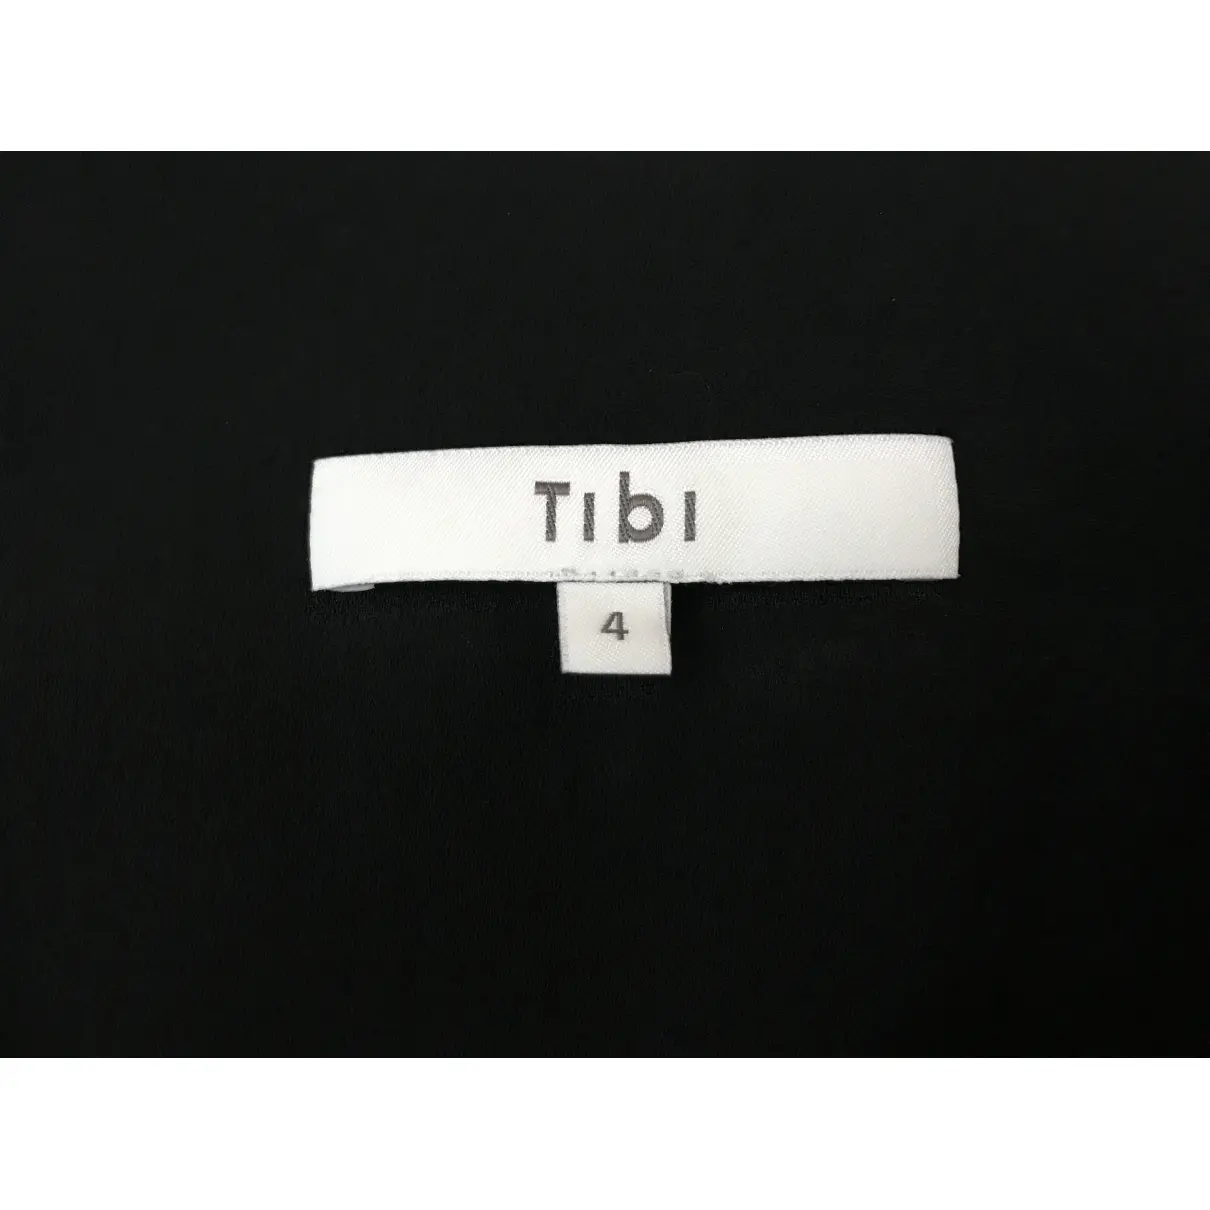 Buy Tibi Black Synthetic Top online